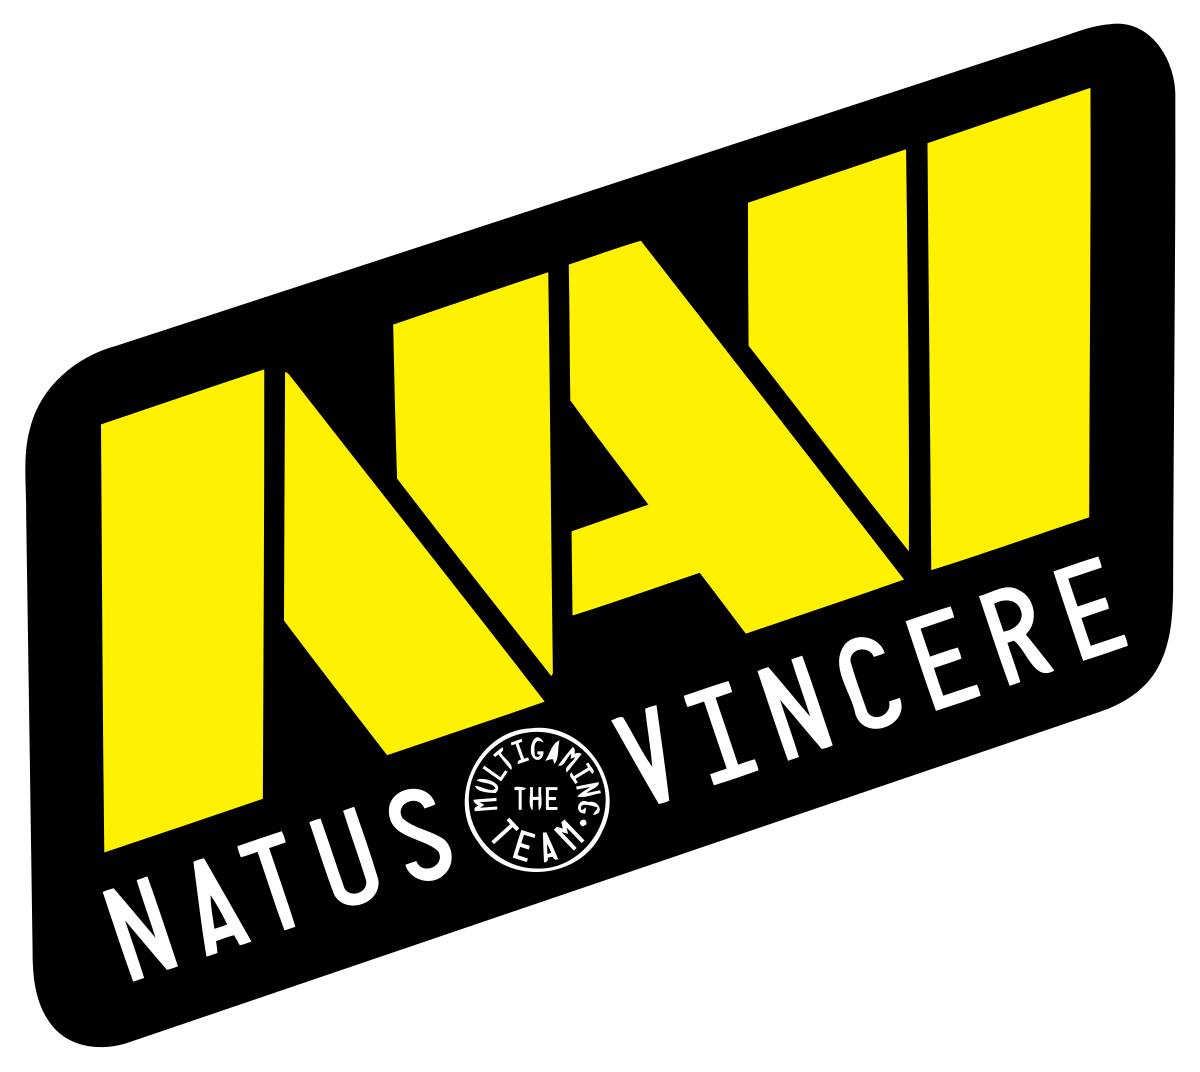 Natus Vincere сыграет с Vitality в первом раунде Legends Stage на мейджоре